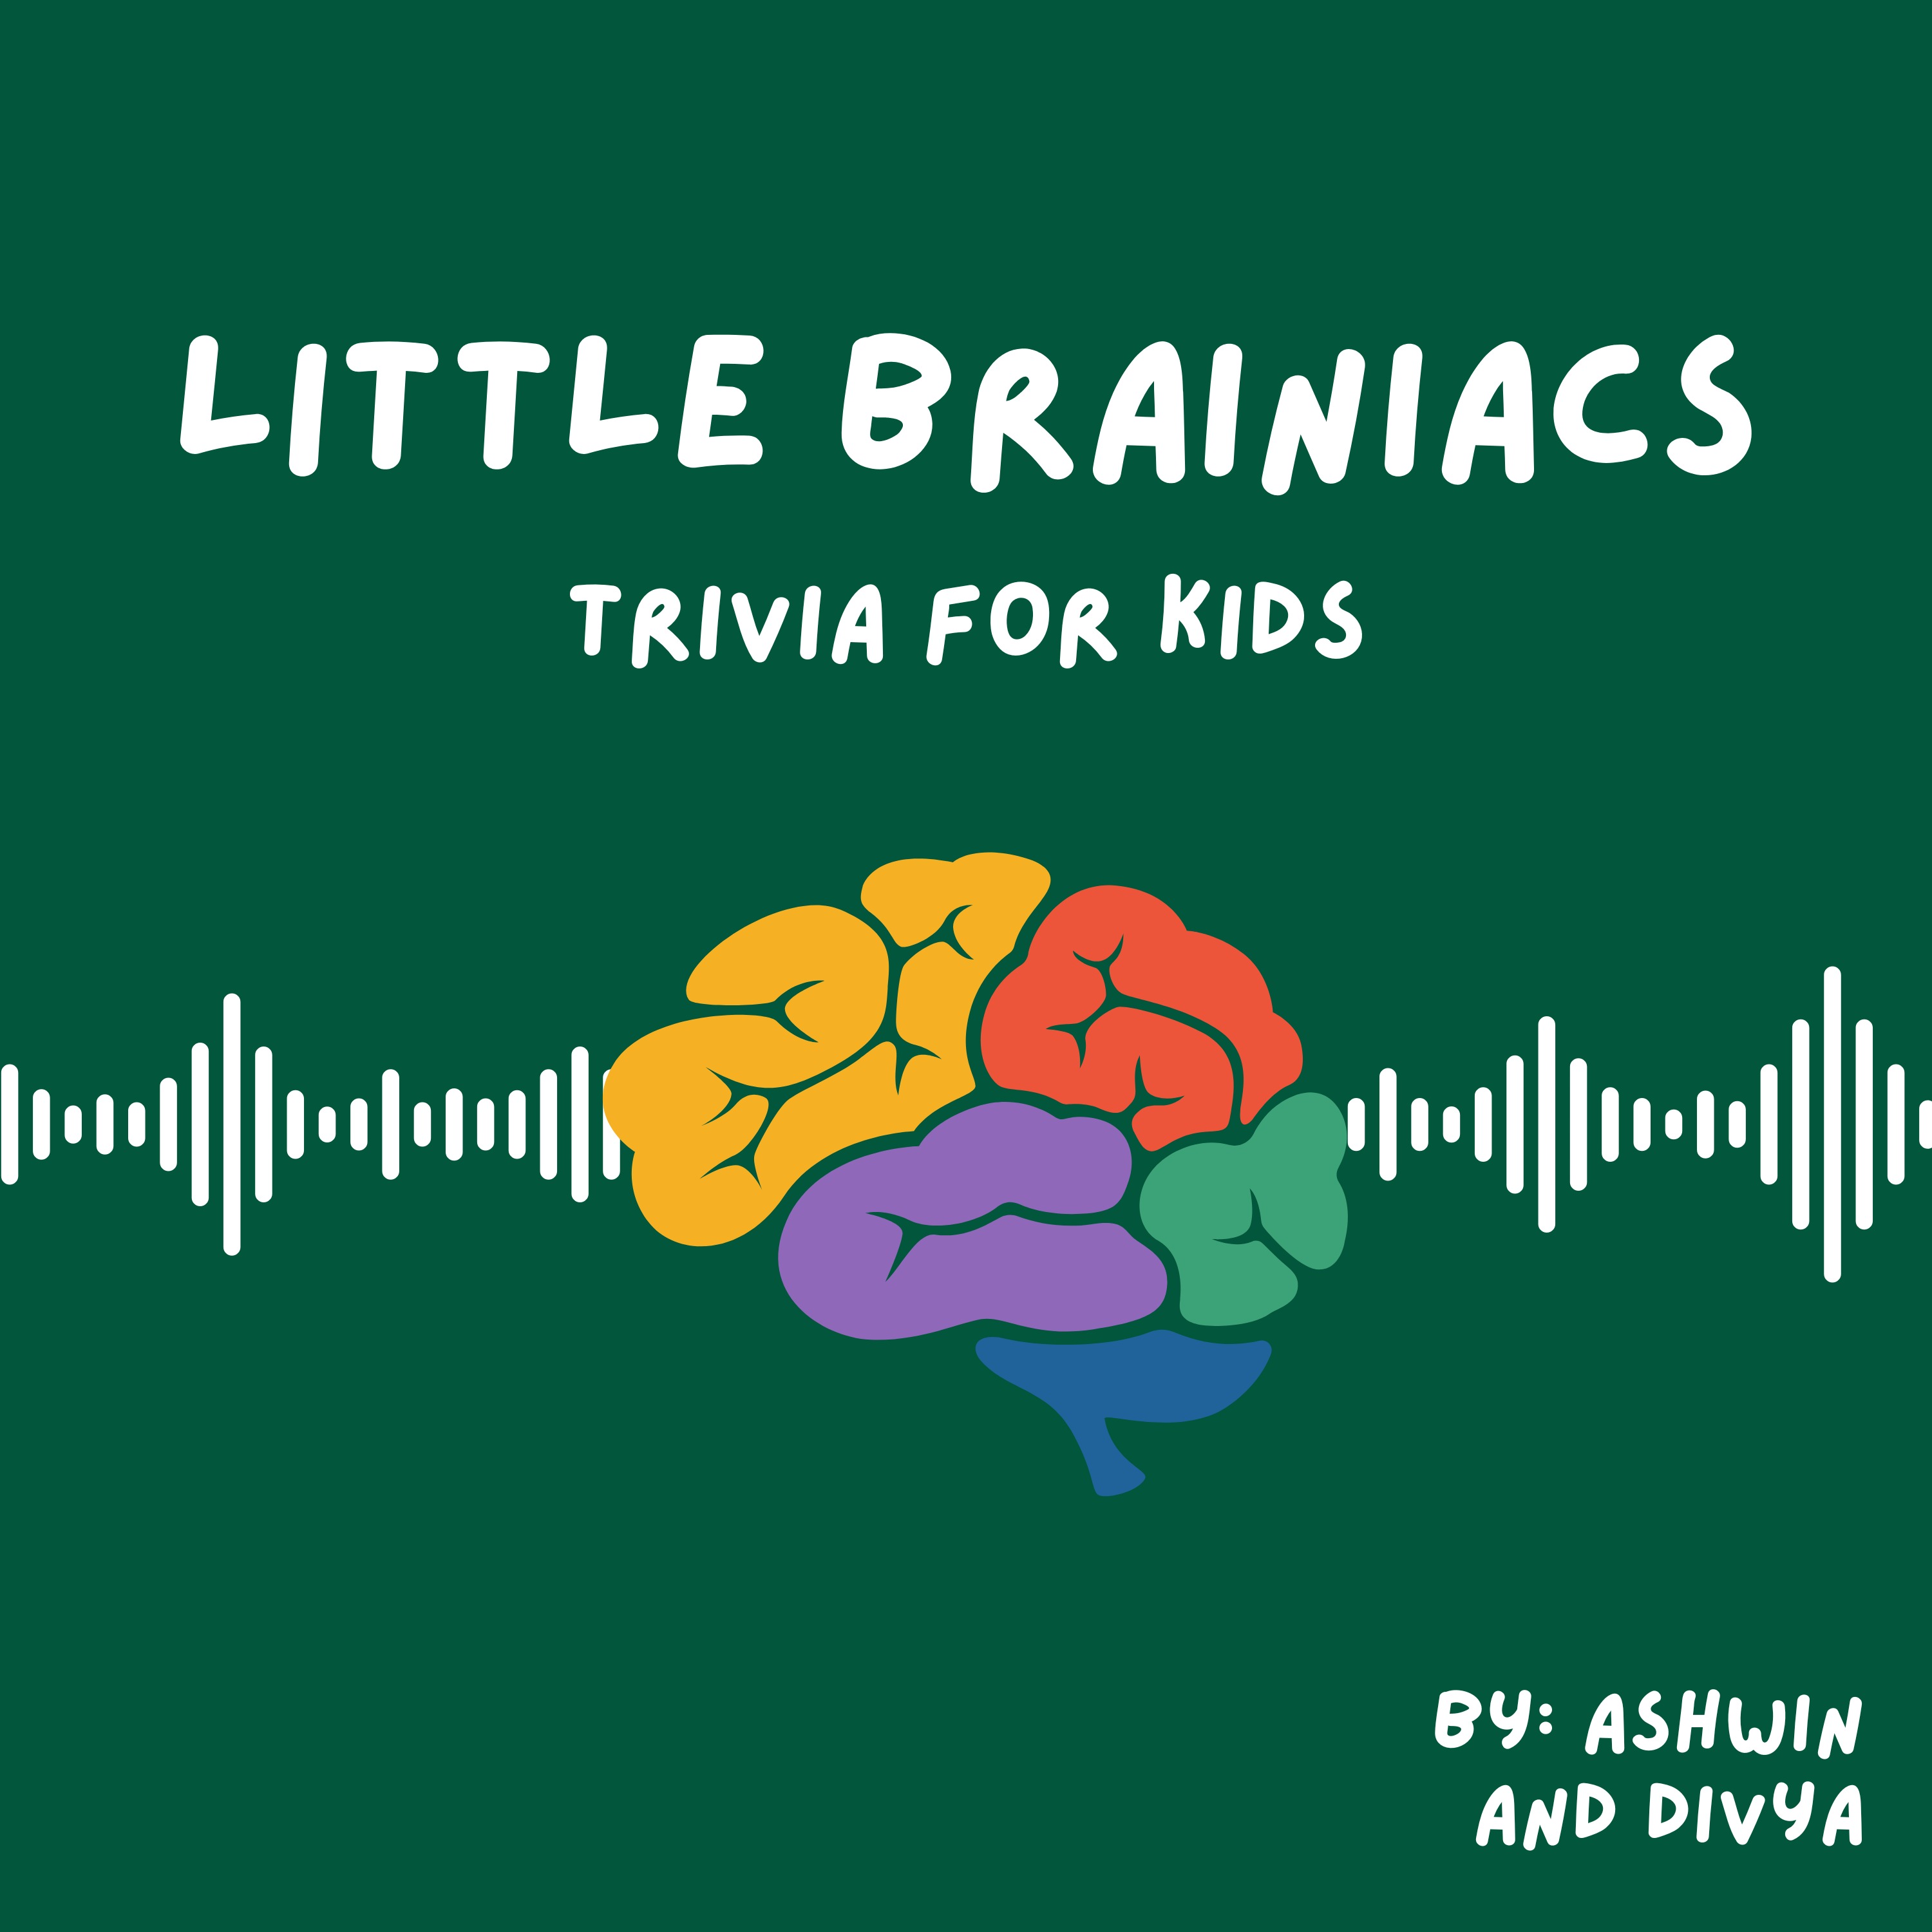 Little Brainiacs